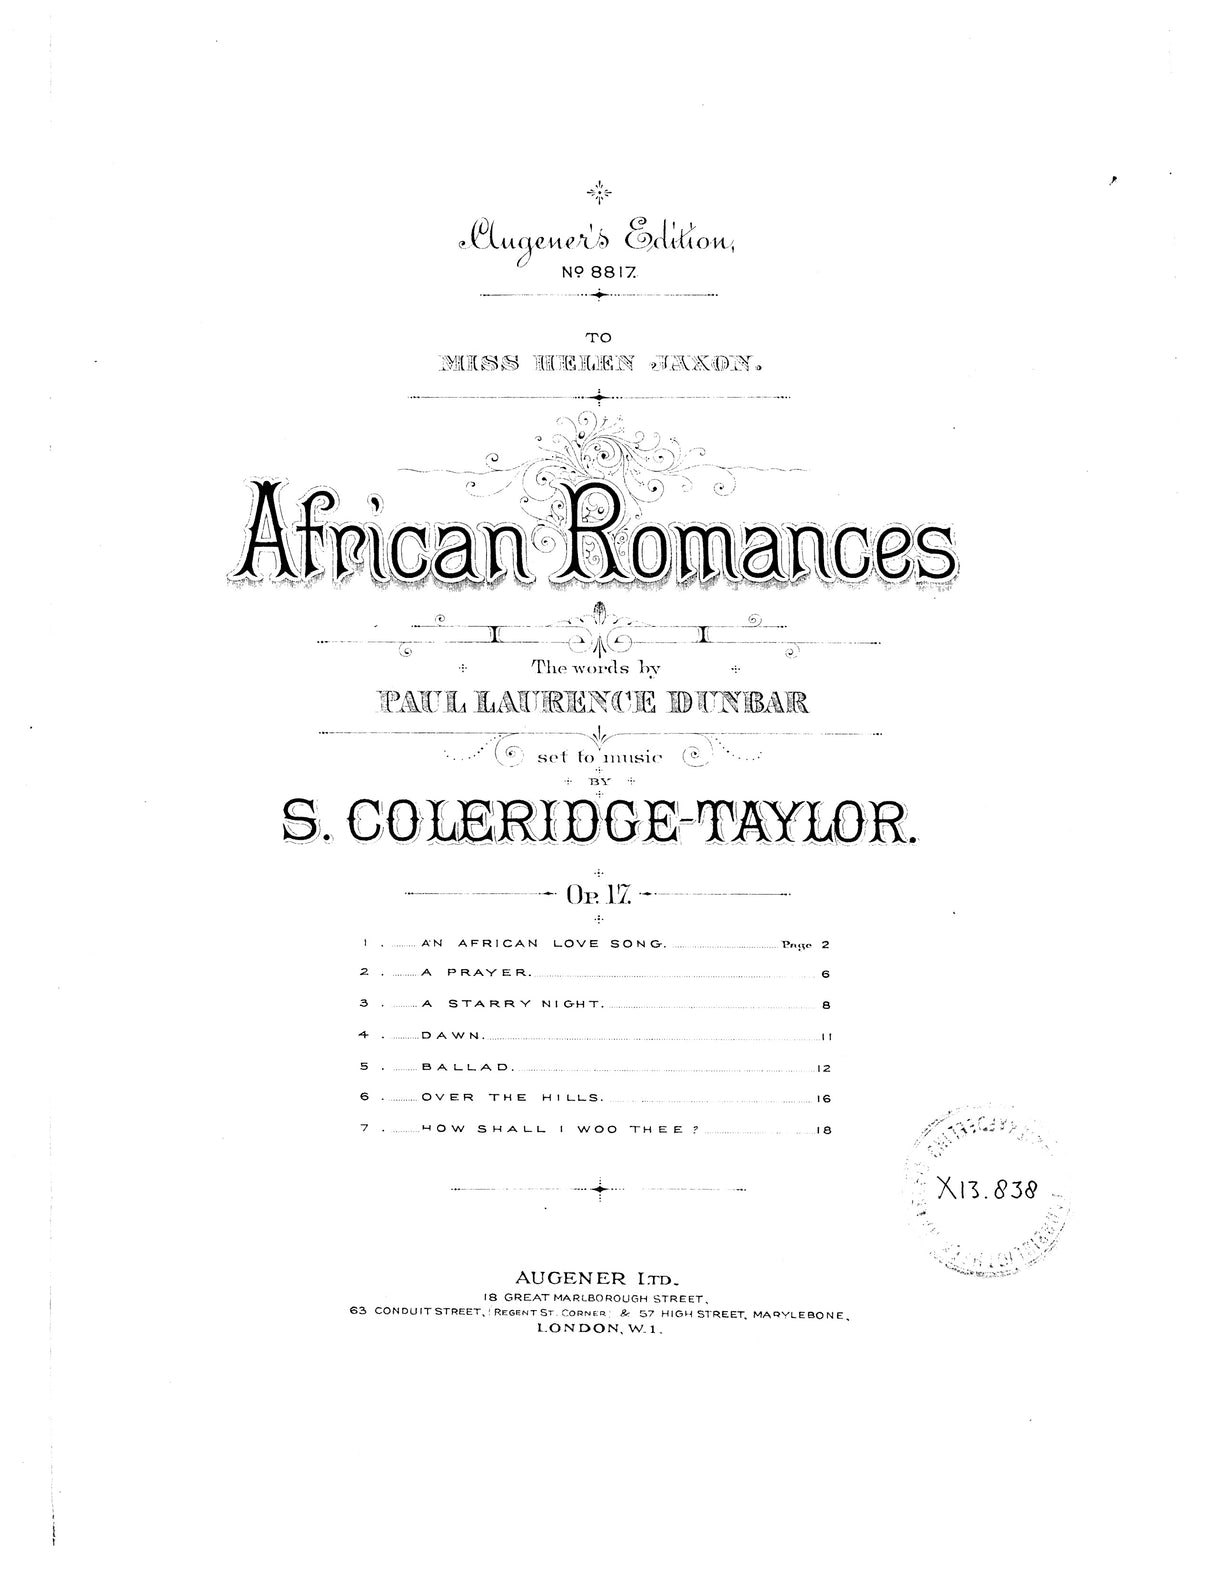 Coleridge-Taylor: African Romances, Op. 17